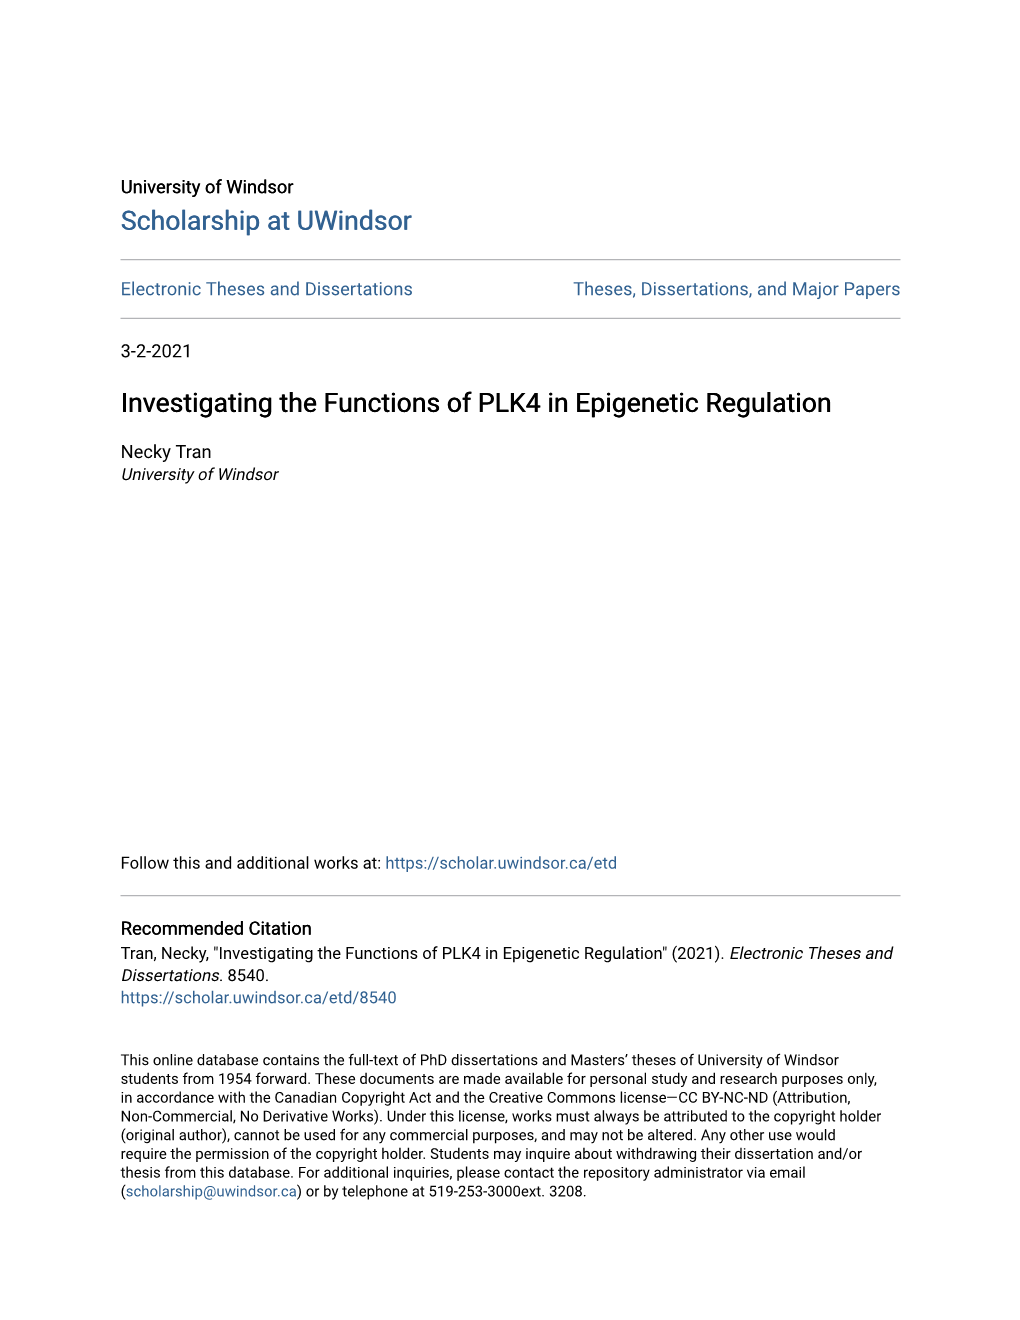 Investigating the Functions of PLK4 in Epigenetic Regulation